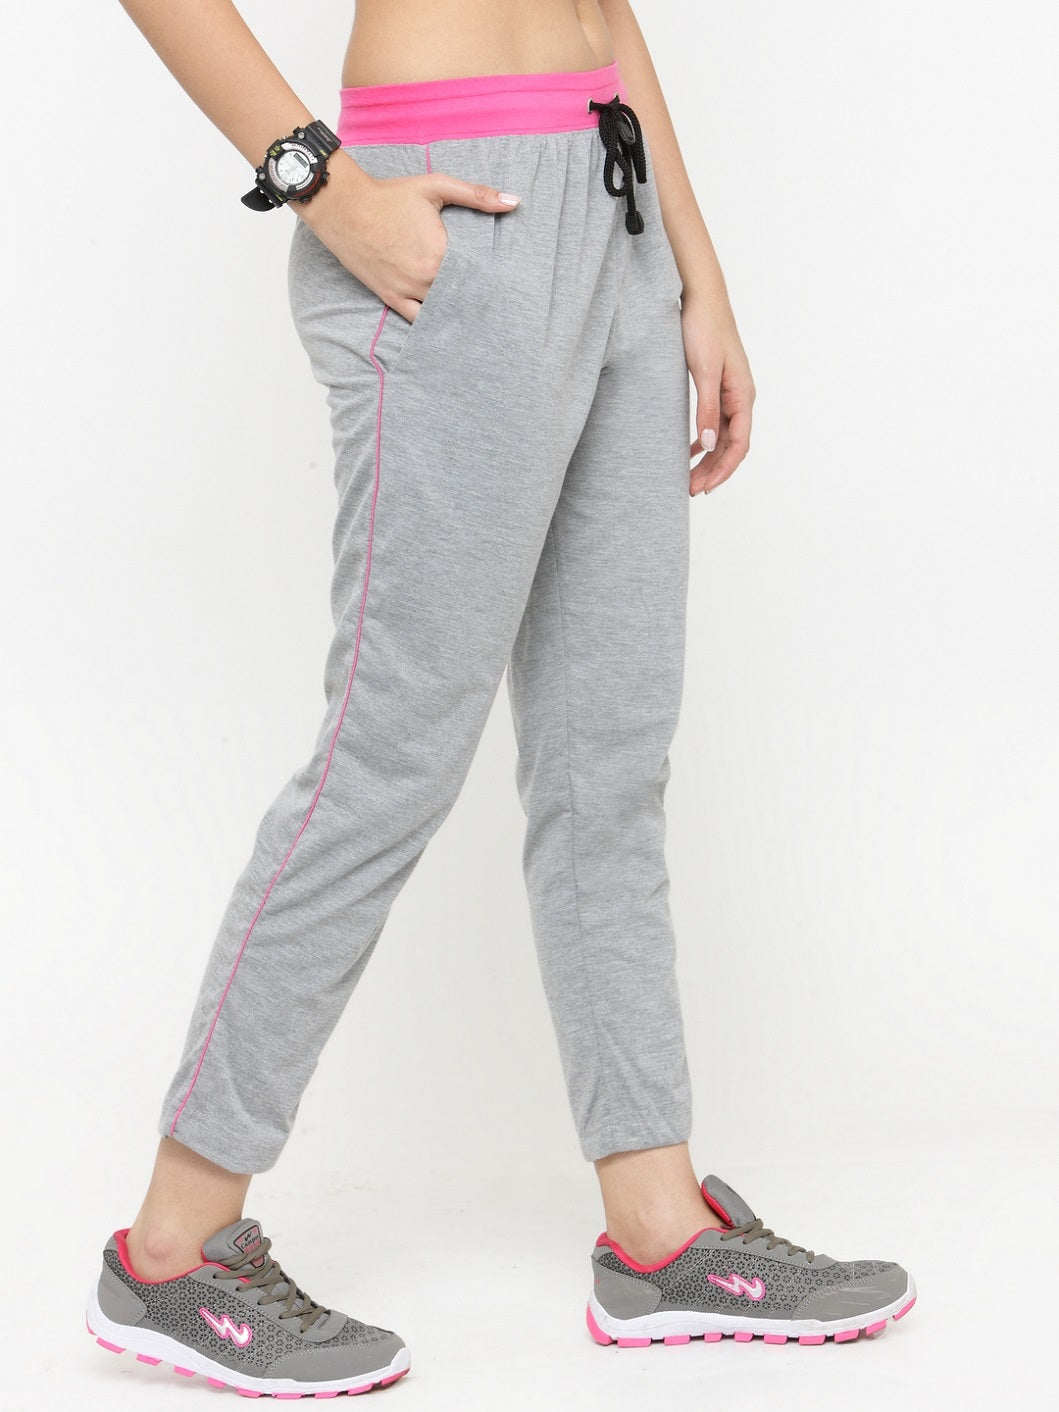 Shop sports trousers for women online